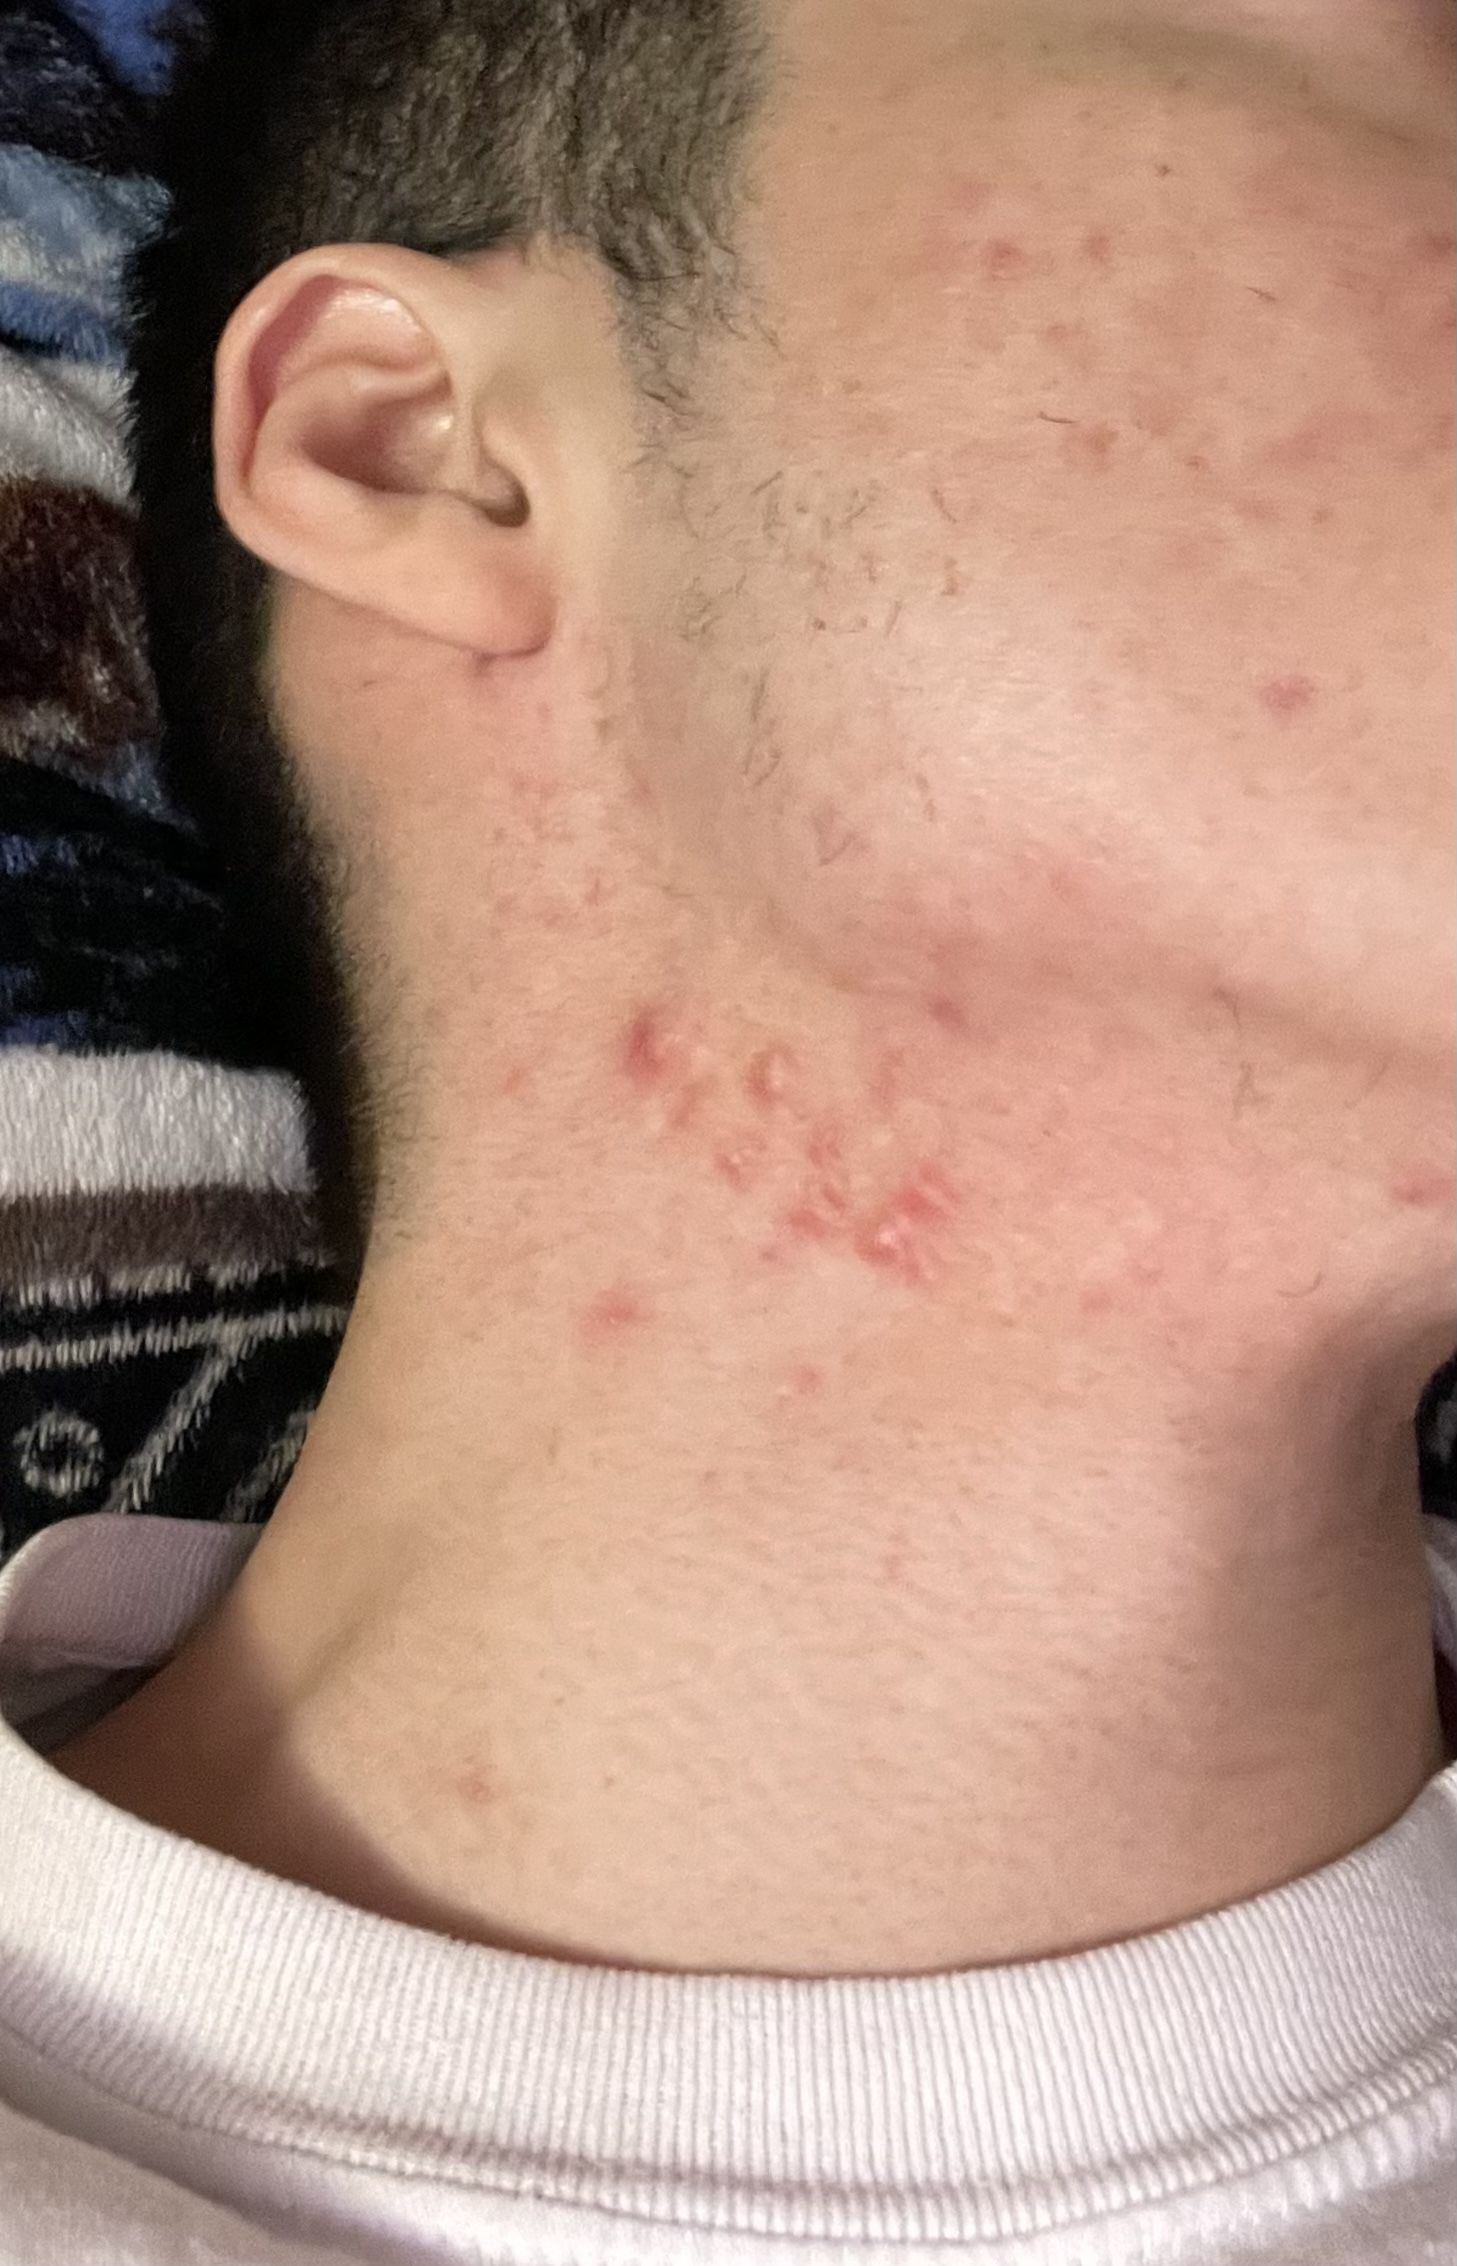 hypertrophic acne scar